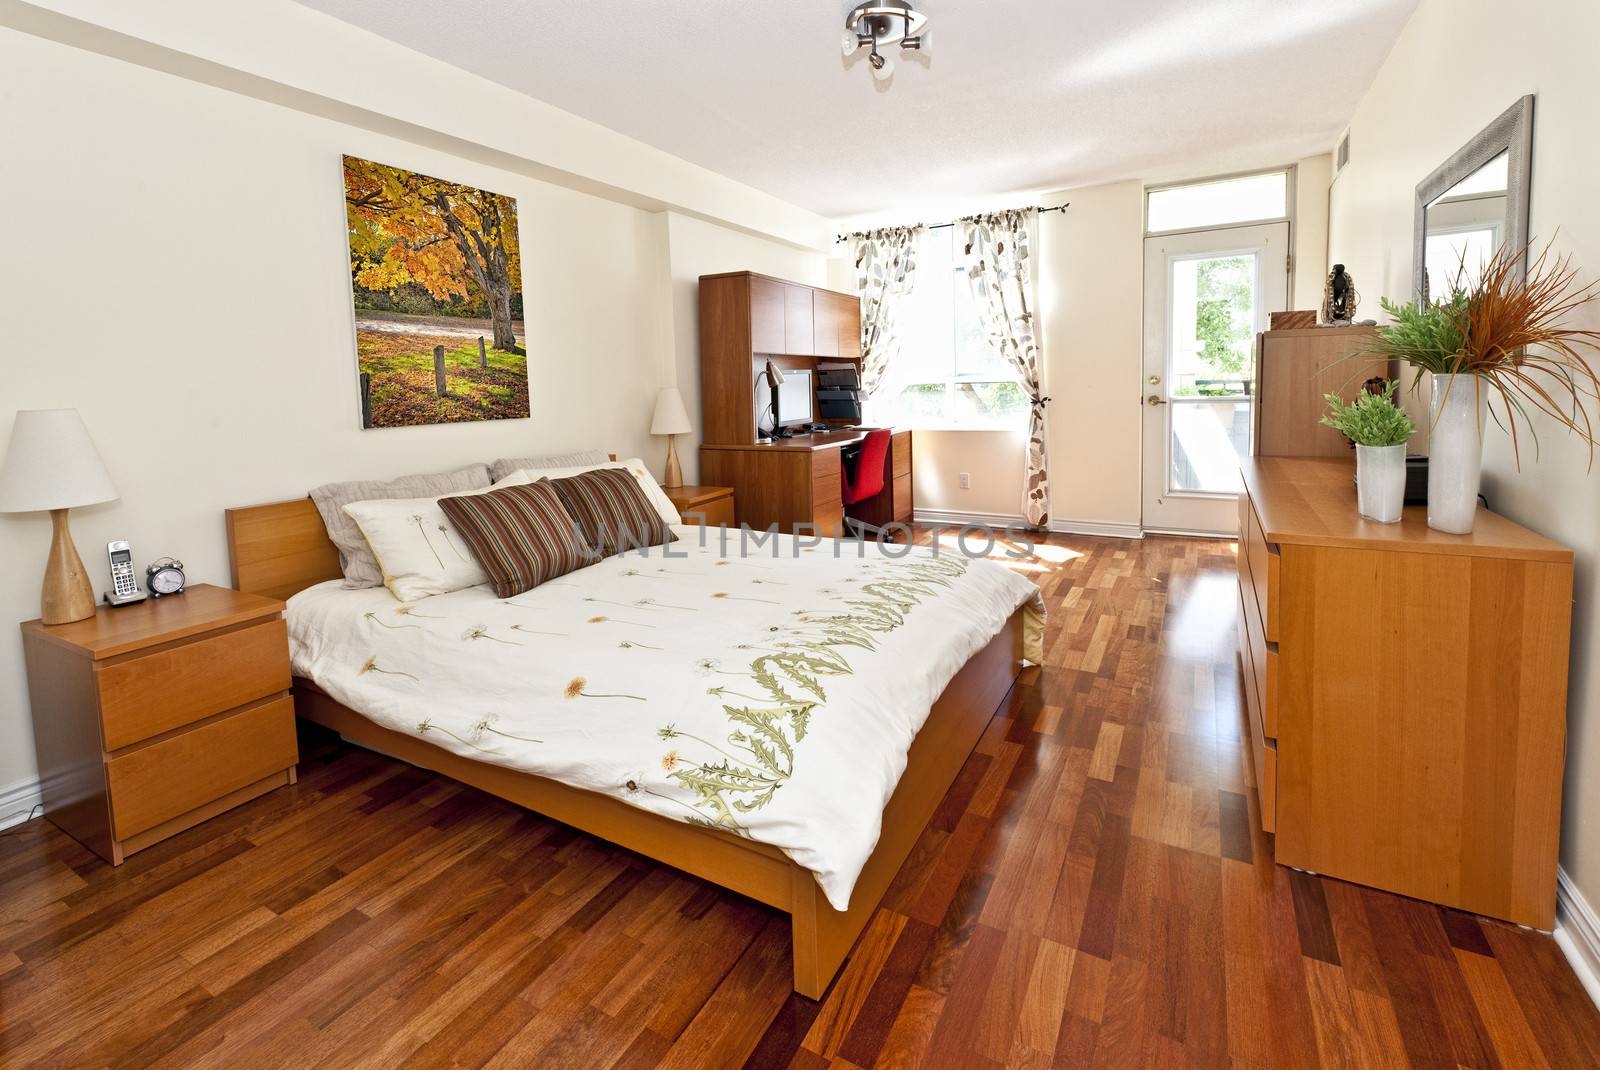 Bedroom interior with hardwood floor by elenathewise